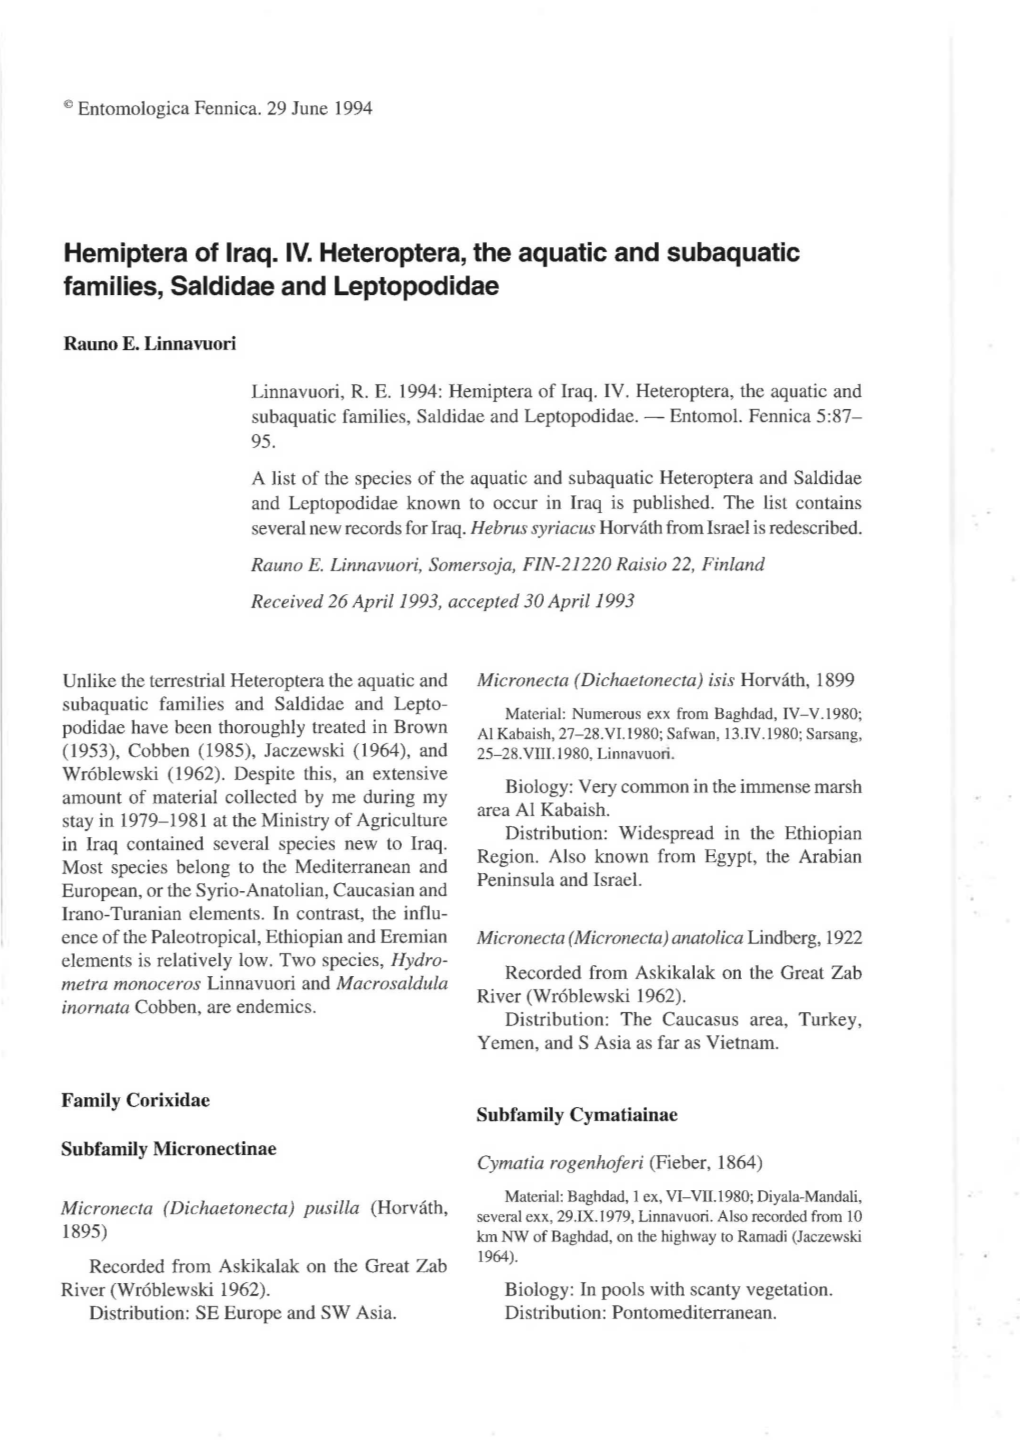 Hemiptera of Iraq. IV. Heteroptera, the Aquatic and Subaquatic Families, Saldidae and Leptopodidae